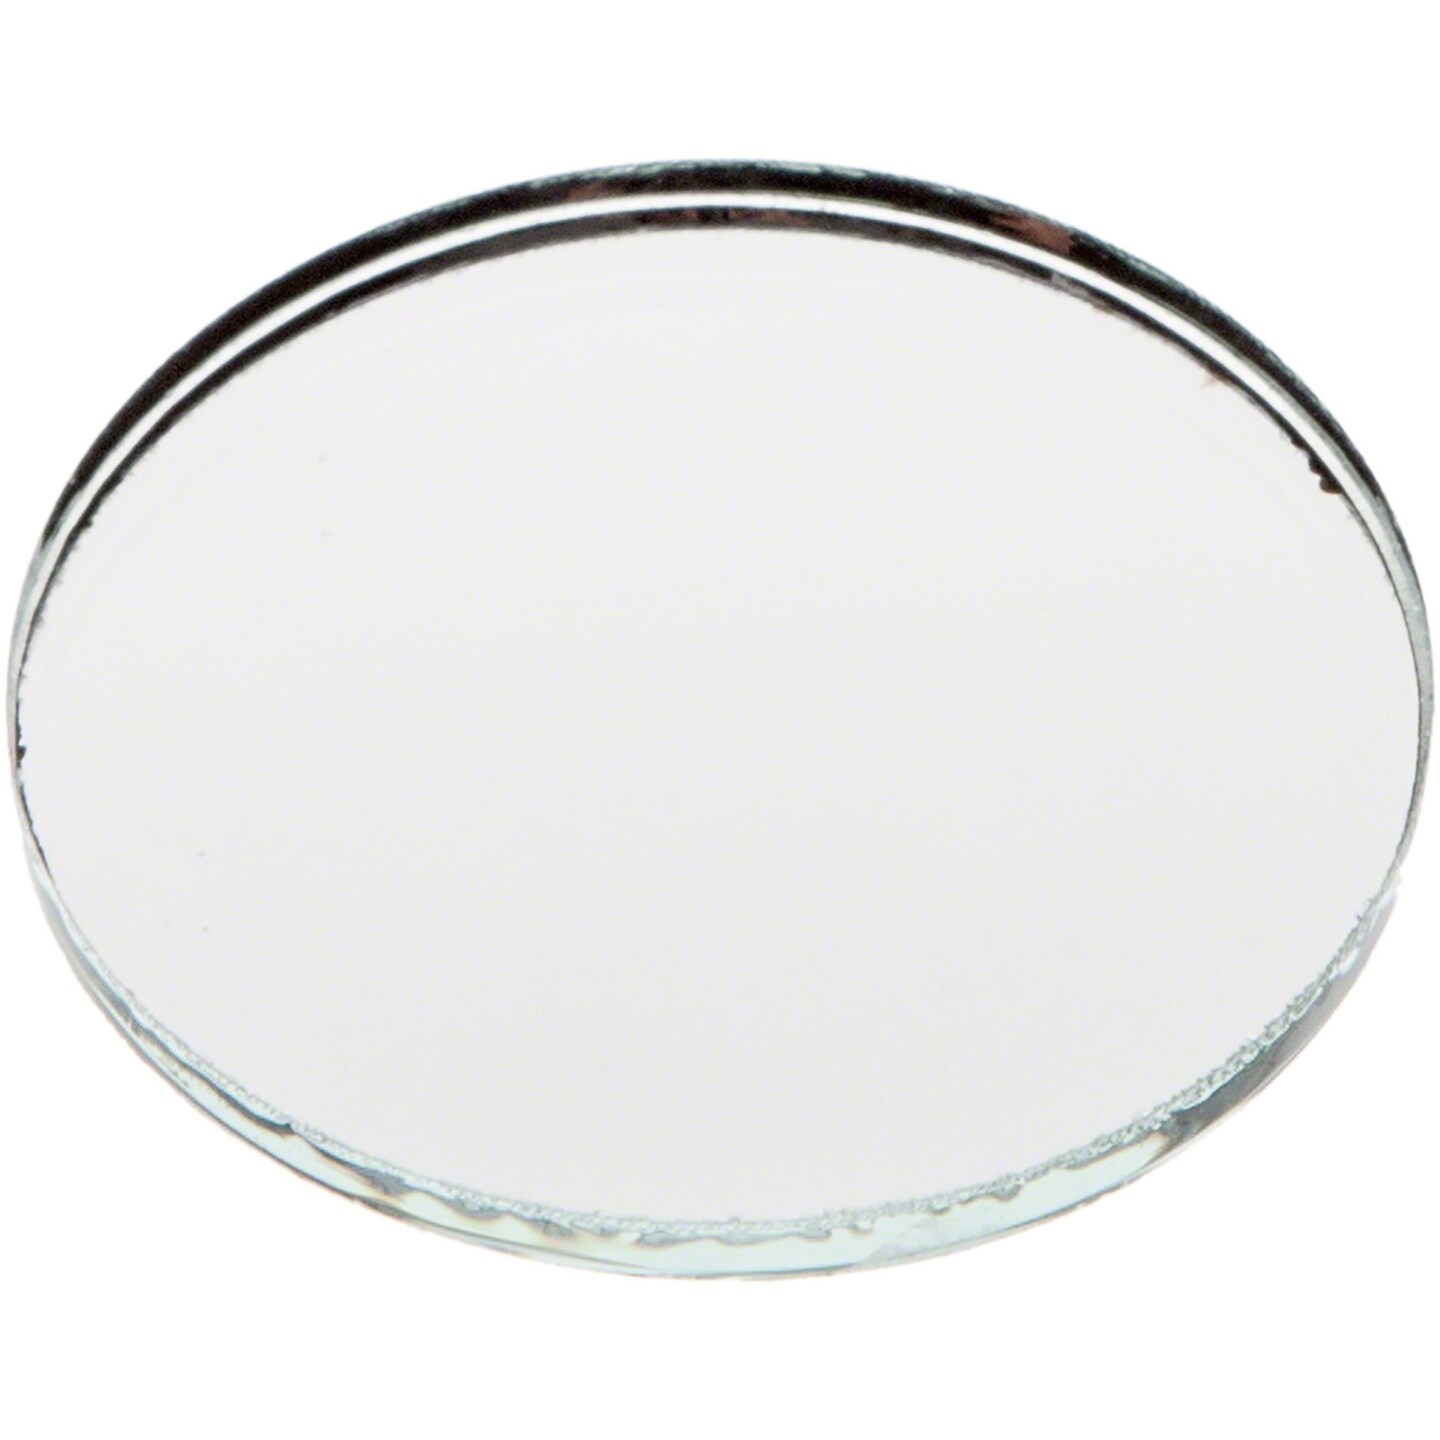 Plymor Round 3mm Non-Beveled Glass Mirror, 1.5 inch x 1.5 inch